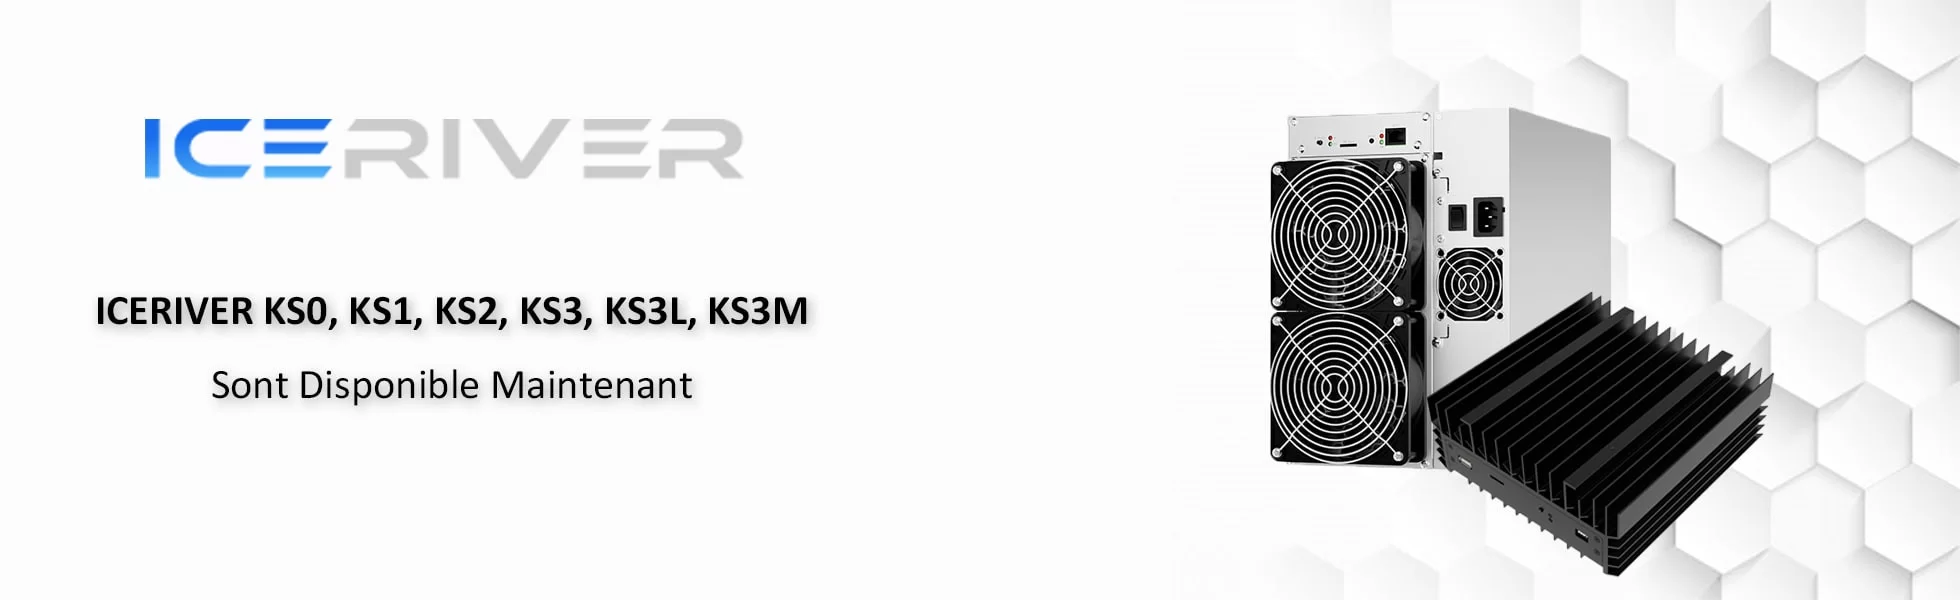 Iceriver KS0, KS1, KS2, KS3, KS3L, KS3M sind jetzt verfügbar